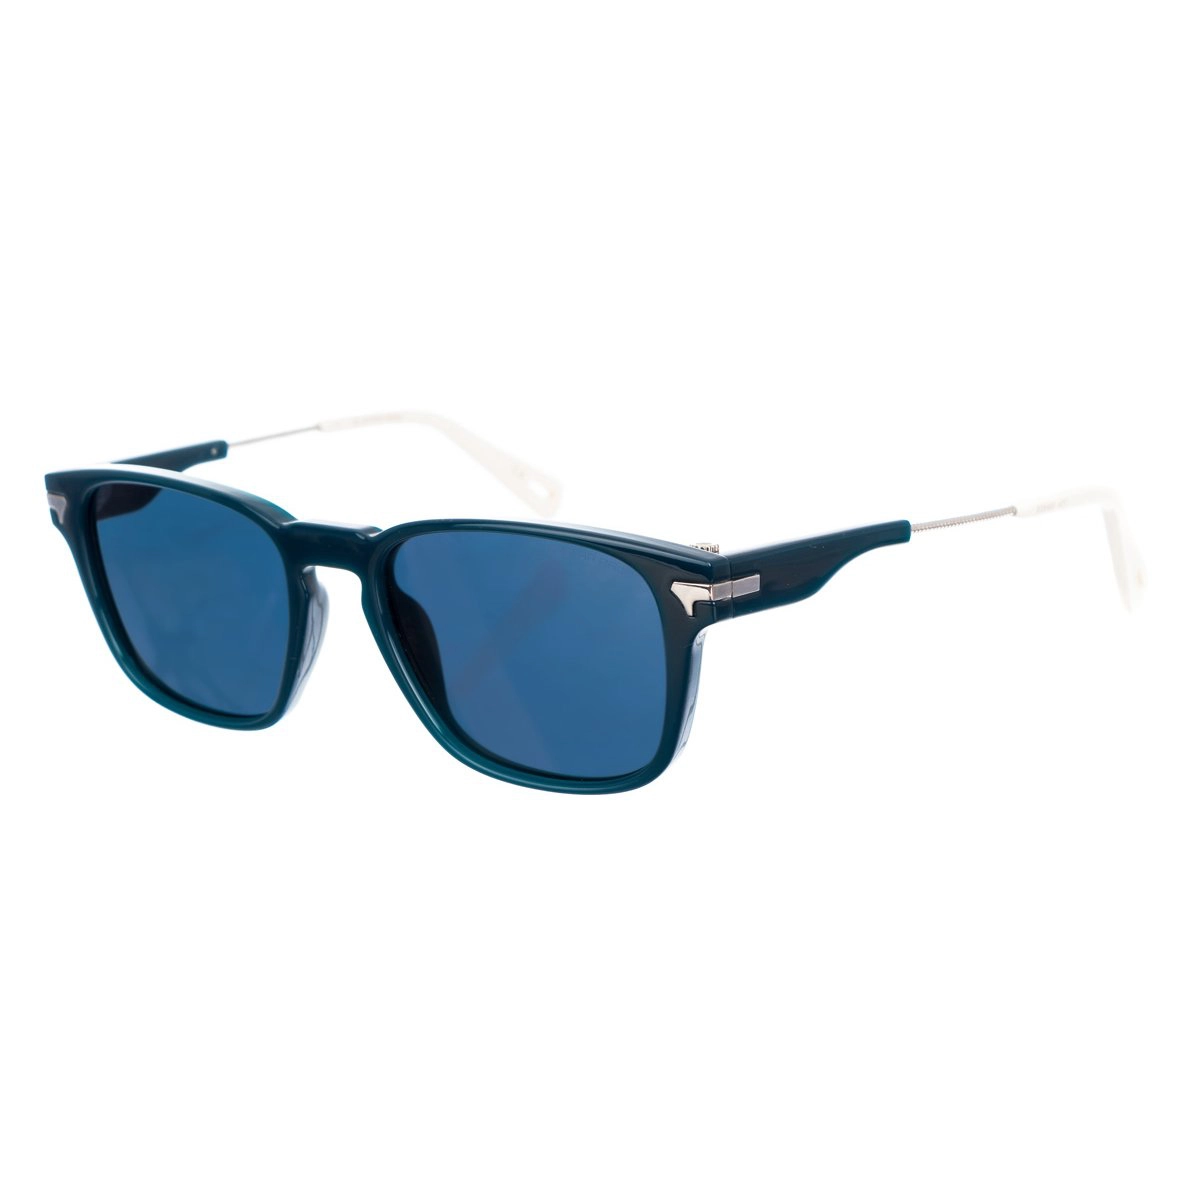 G-Star Raw sunglasses GS646S-425